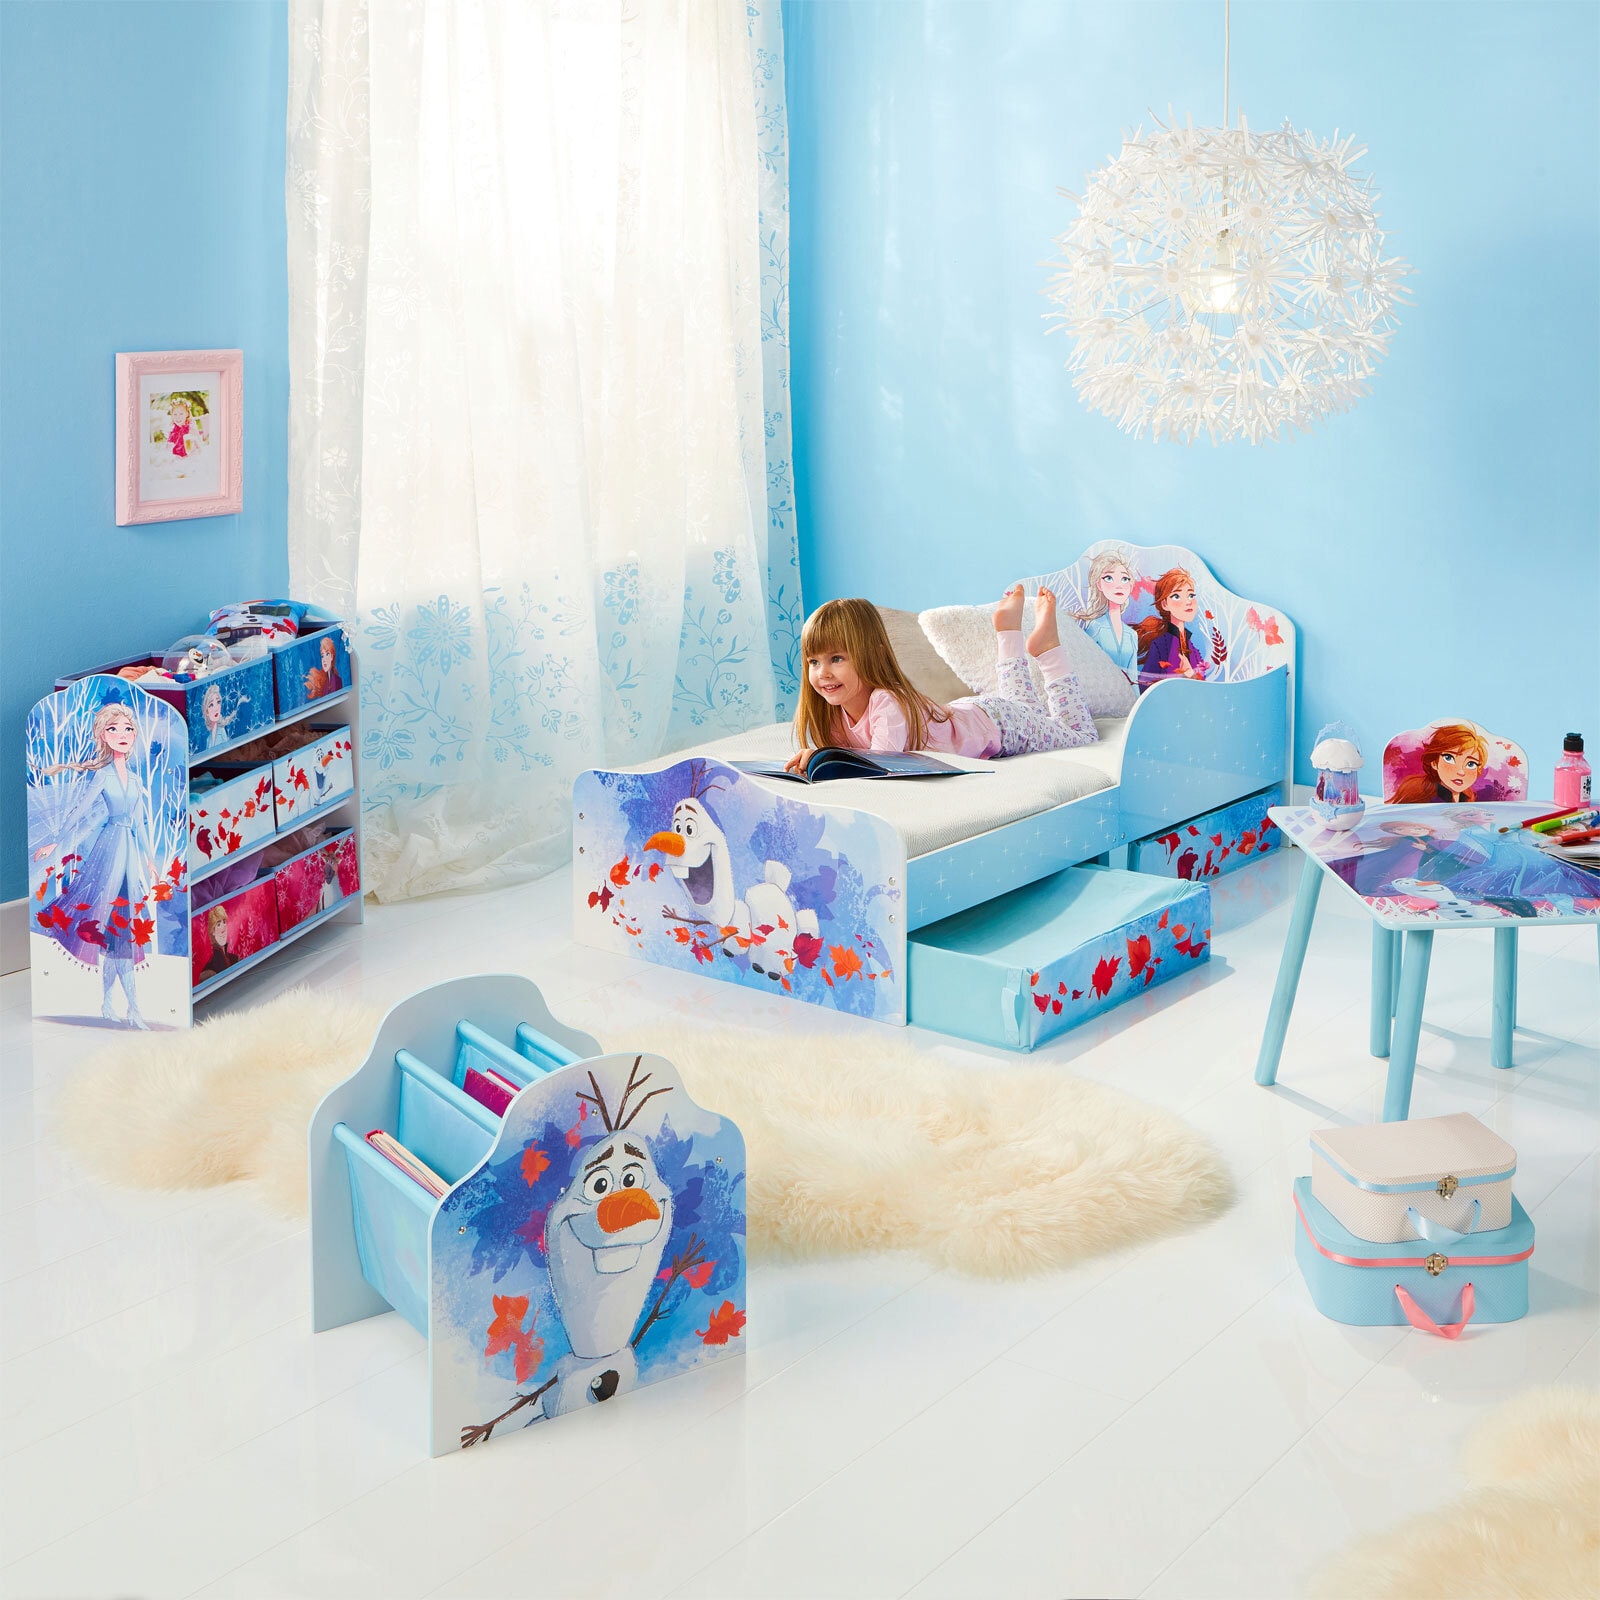 moose Klein-Kinderbett EISKÖNIGIN 70 x 140 cm blau/ mehrfarbig